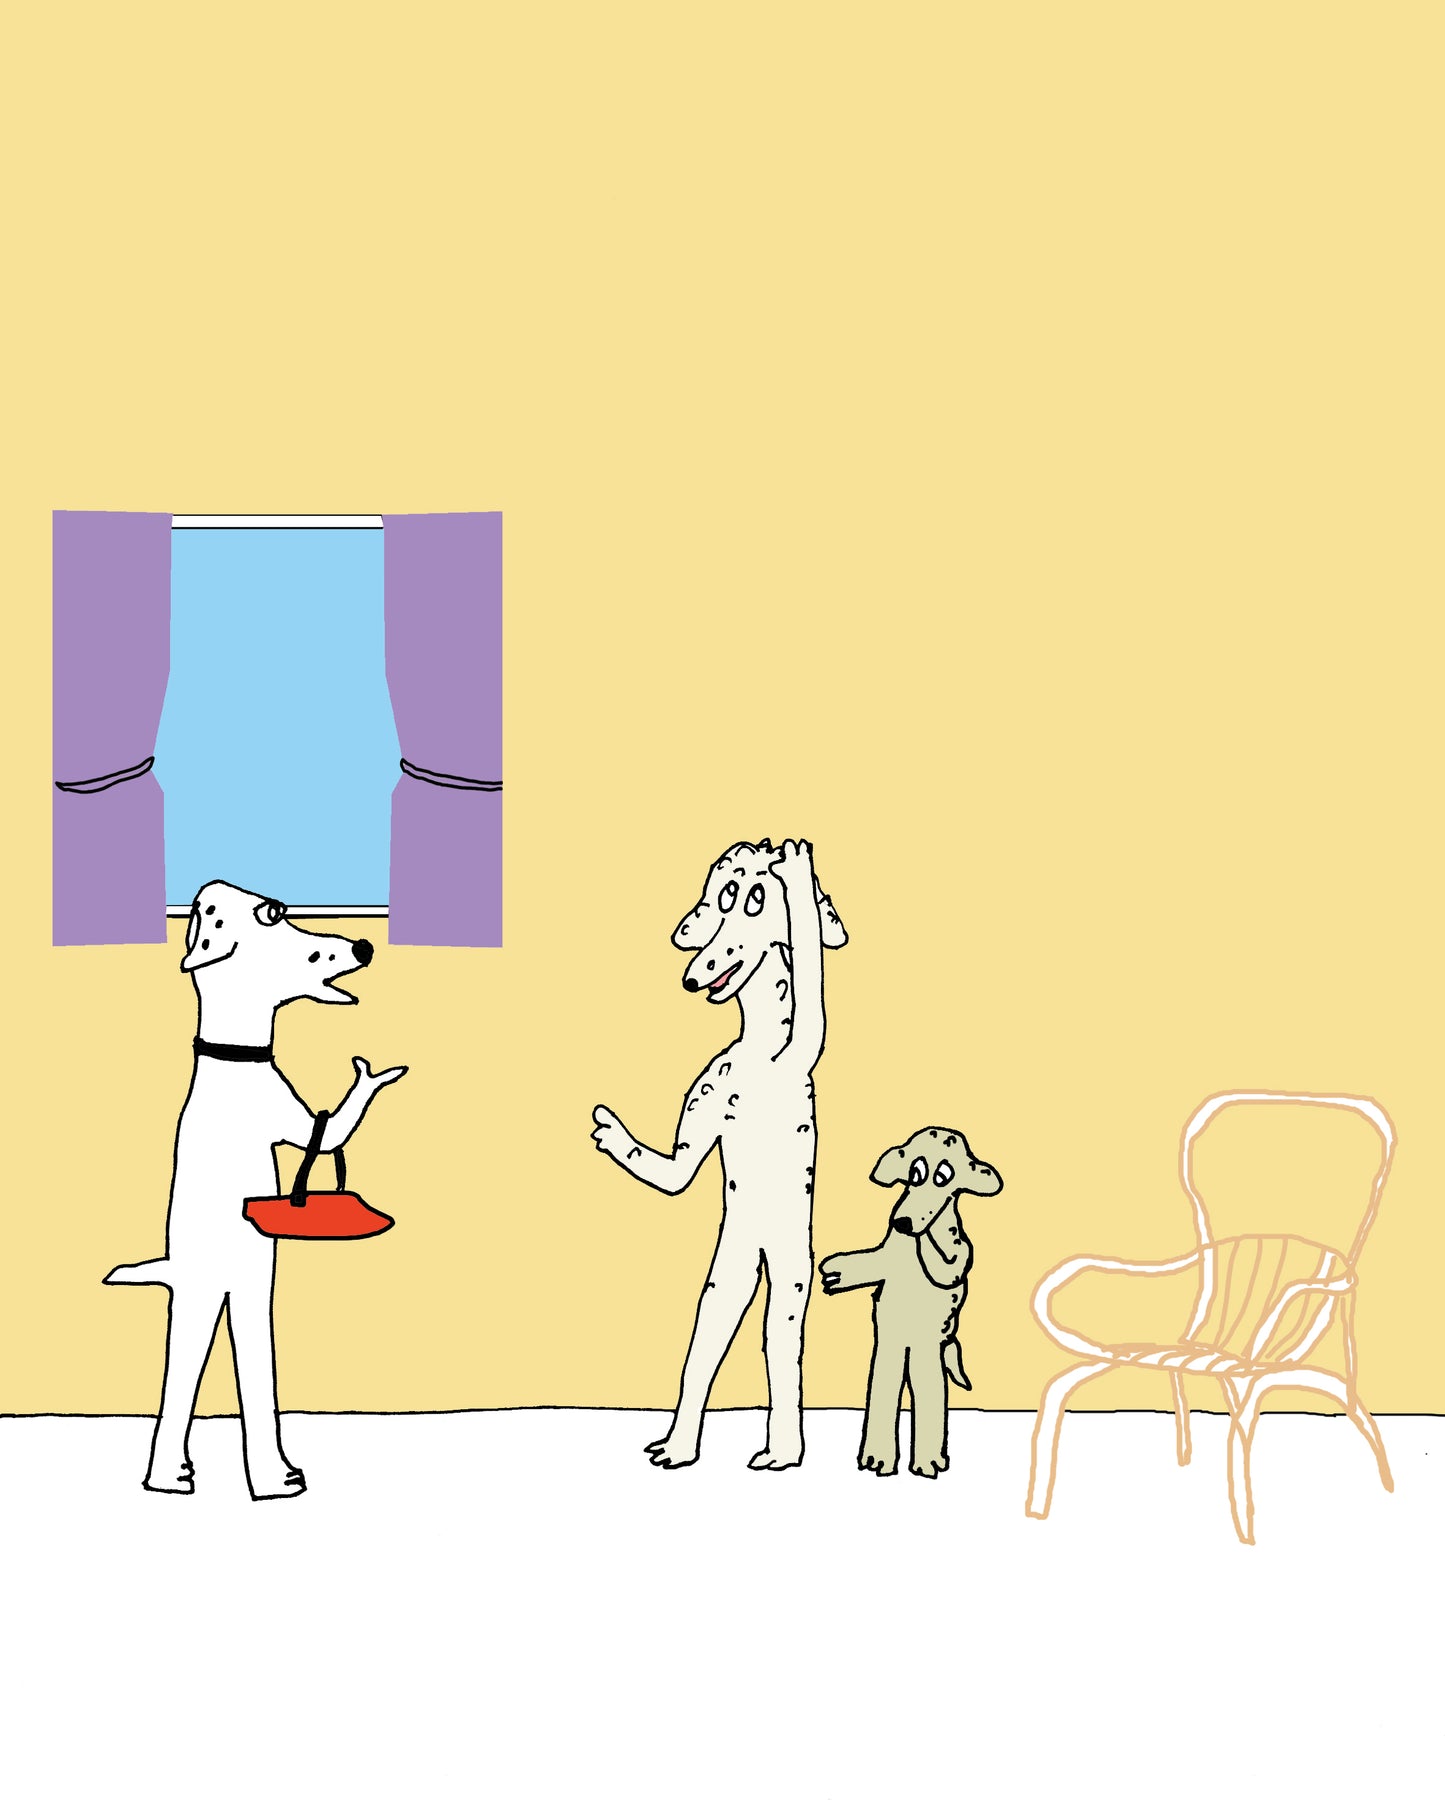 ”Stella en hund” - Nappen borta! Barnbok/Childrens bok, 2-5 years old